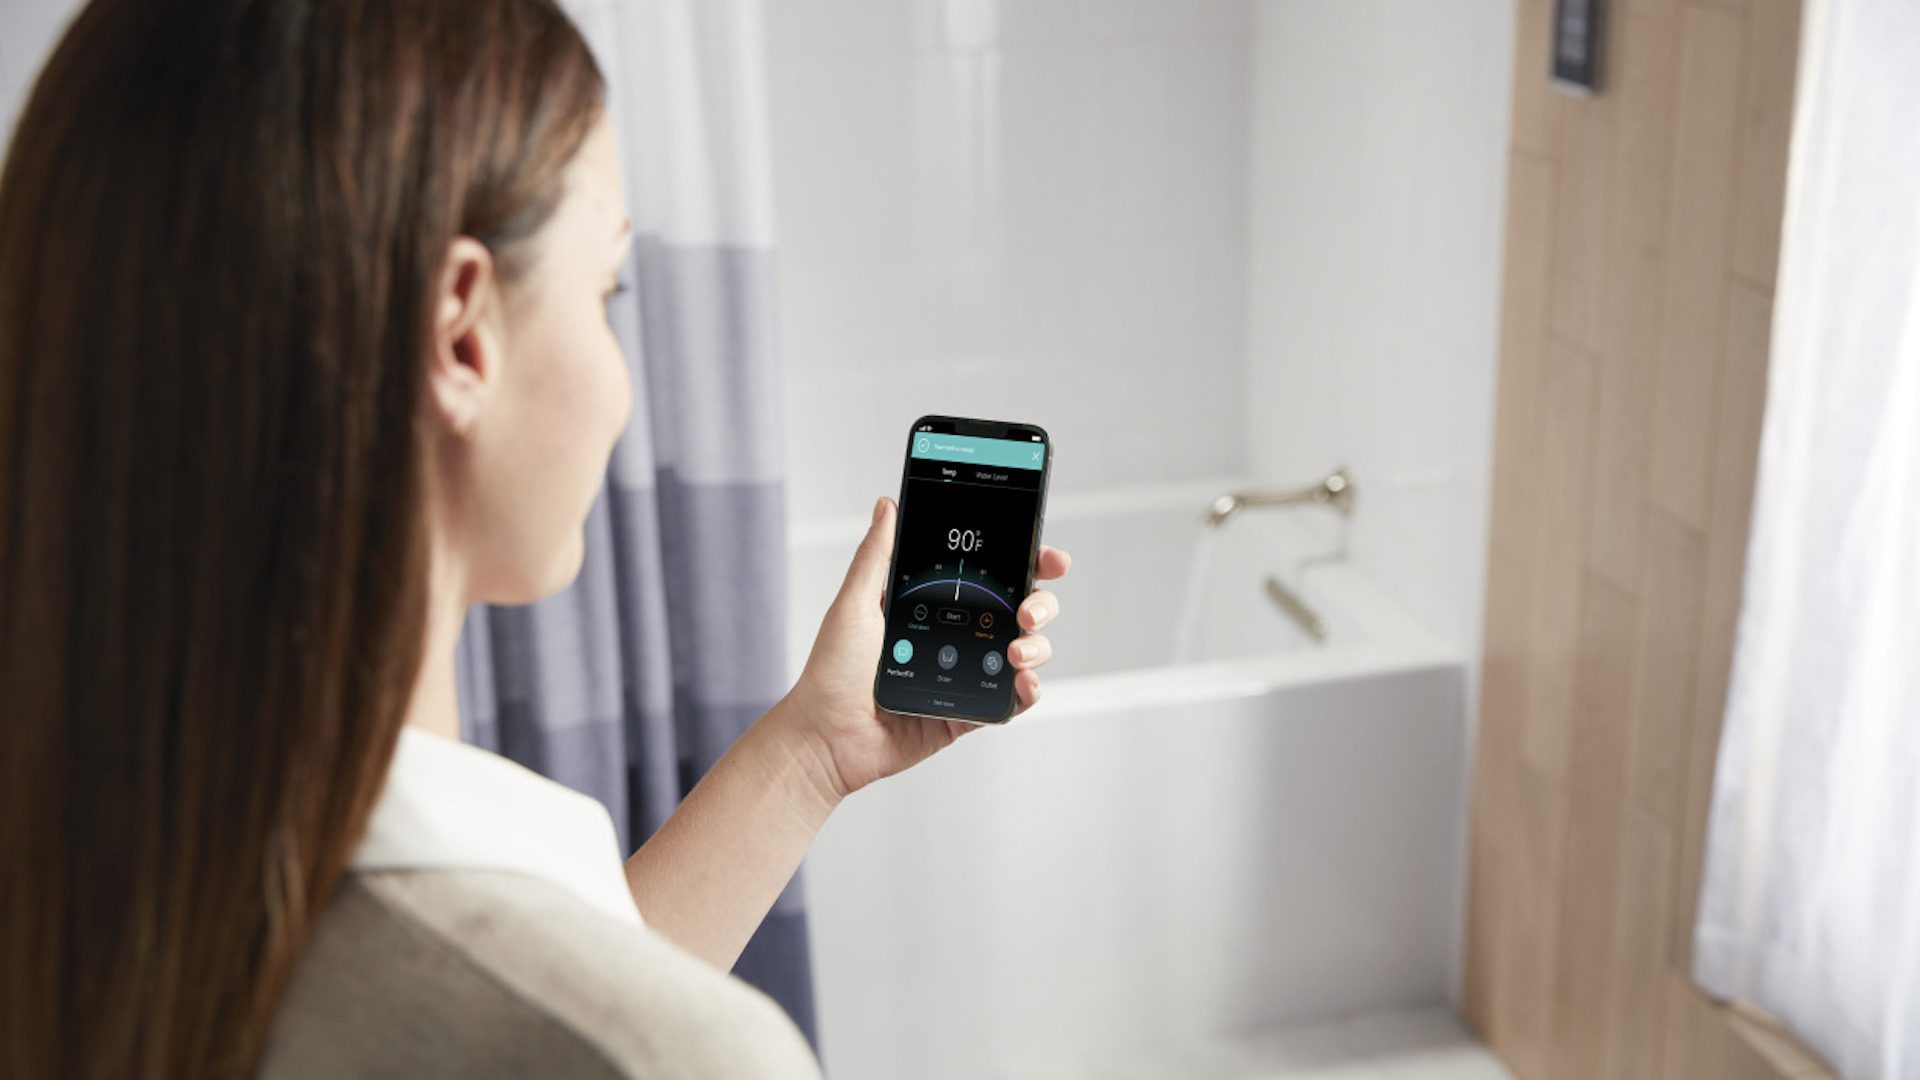 KOHLER PerfectFill smart bathing technology